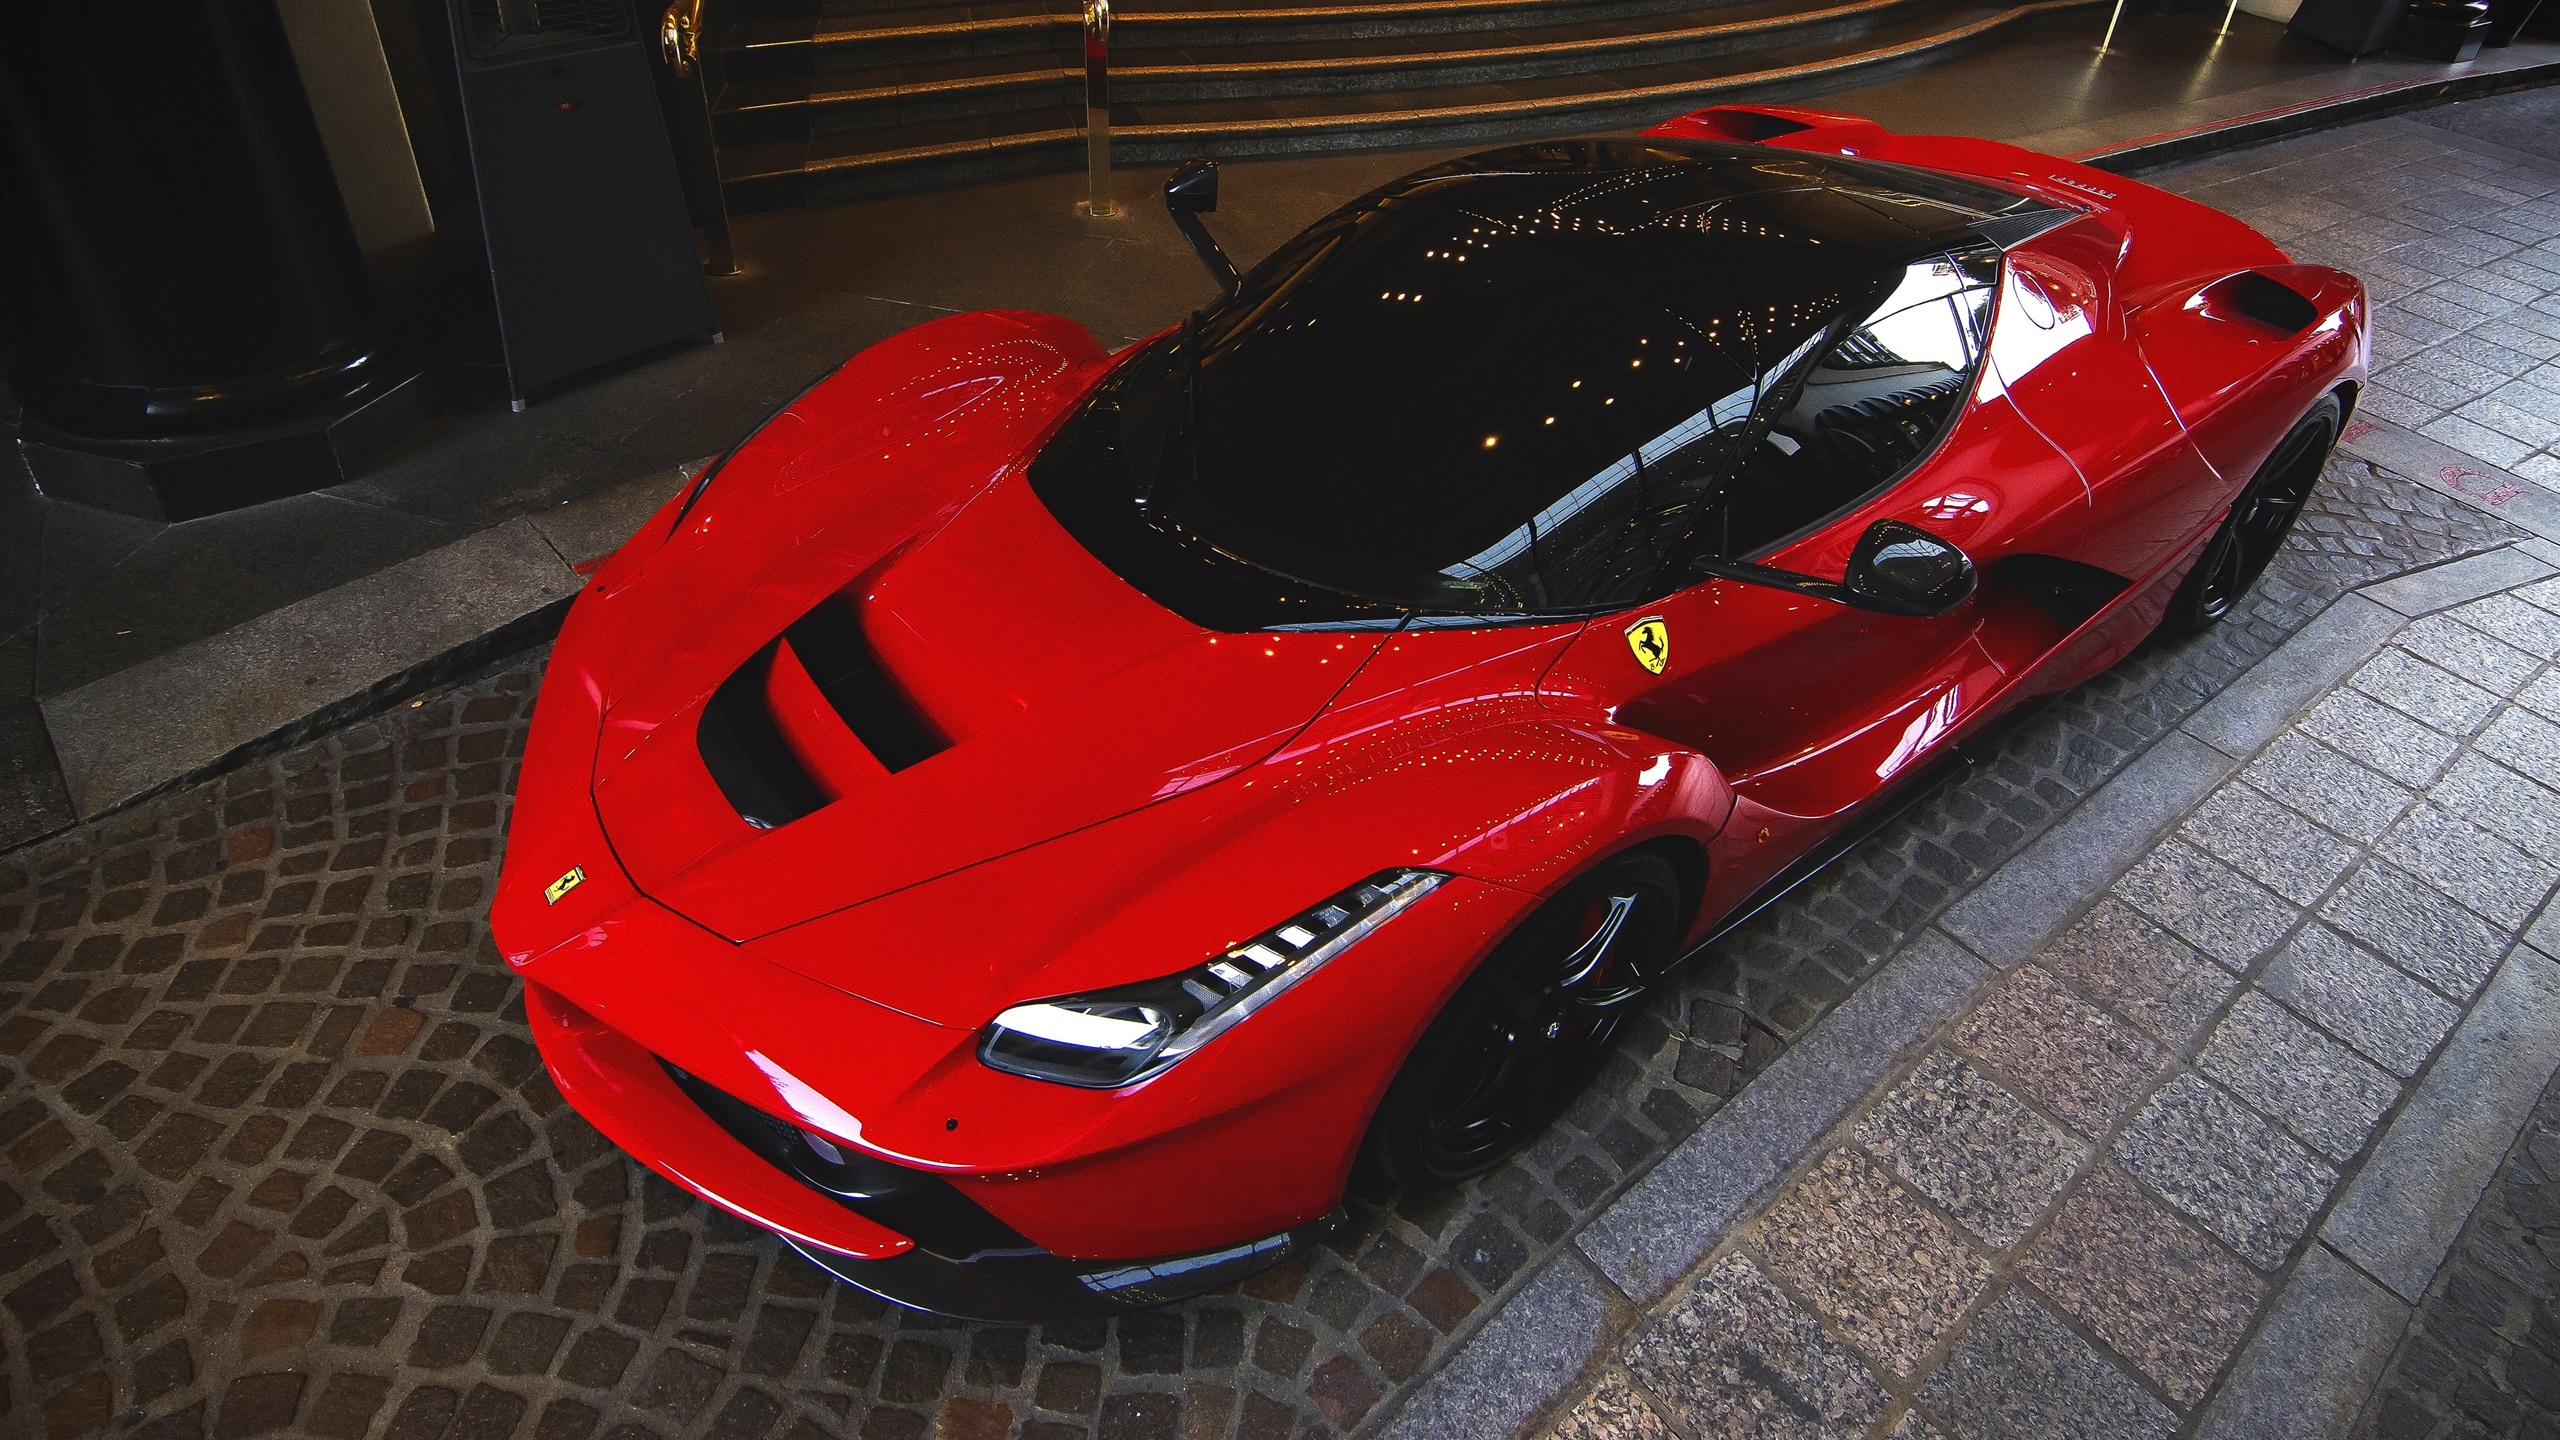 General 2560x1440 red cars Ferrari road Ferrari LaFerrari high angle Hypercar hybrid (car) italian cars Stellantis